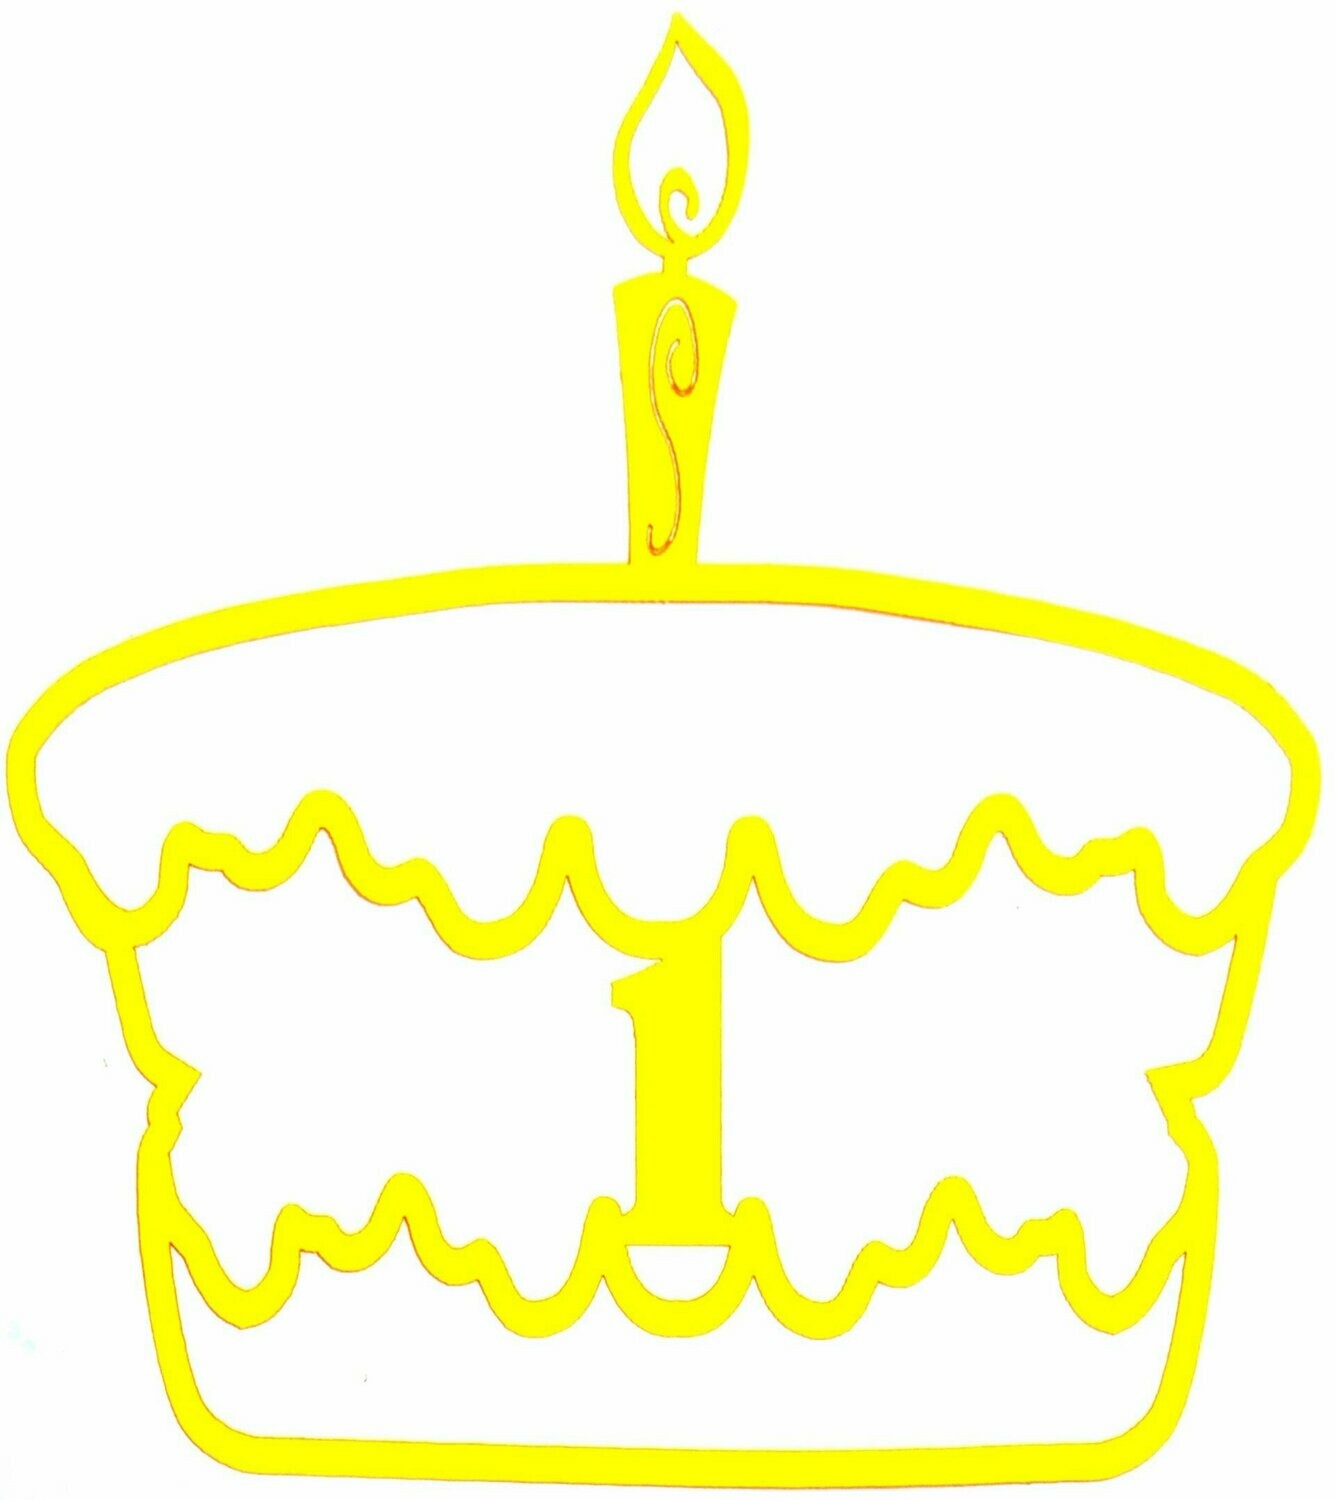 Birthday Cake 1